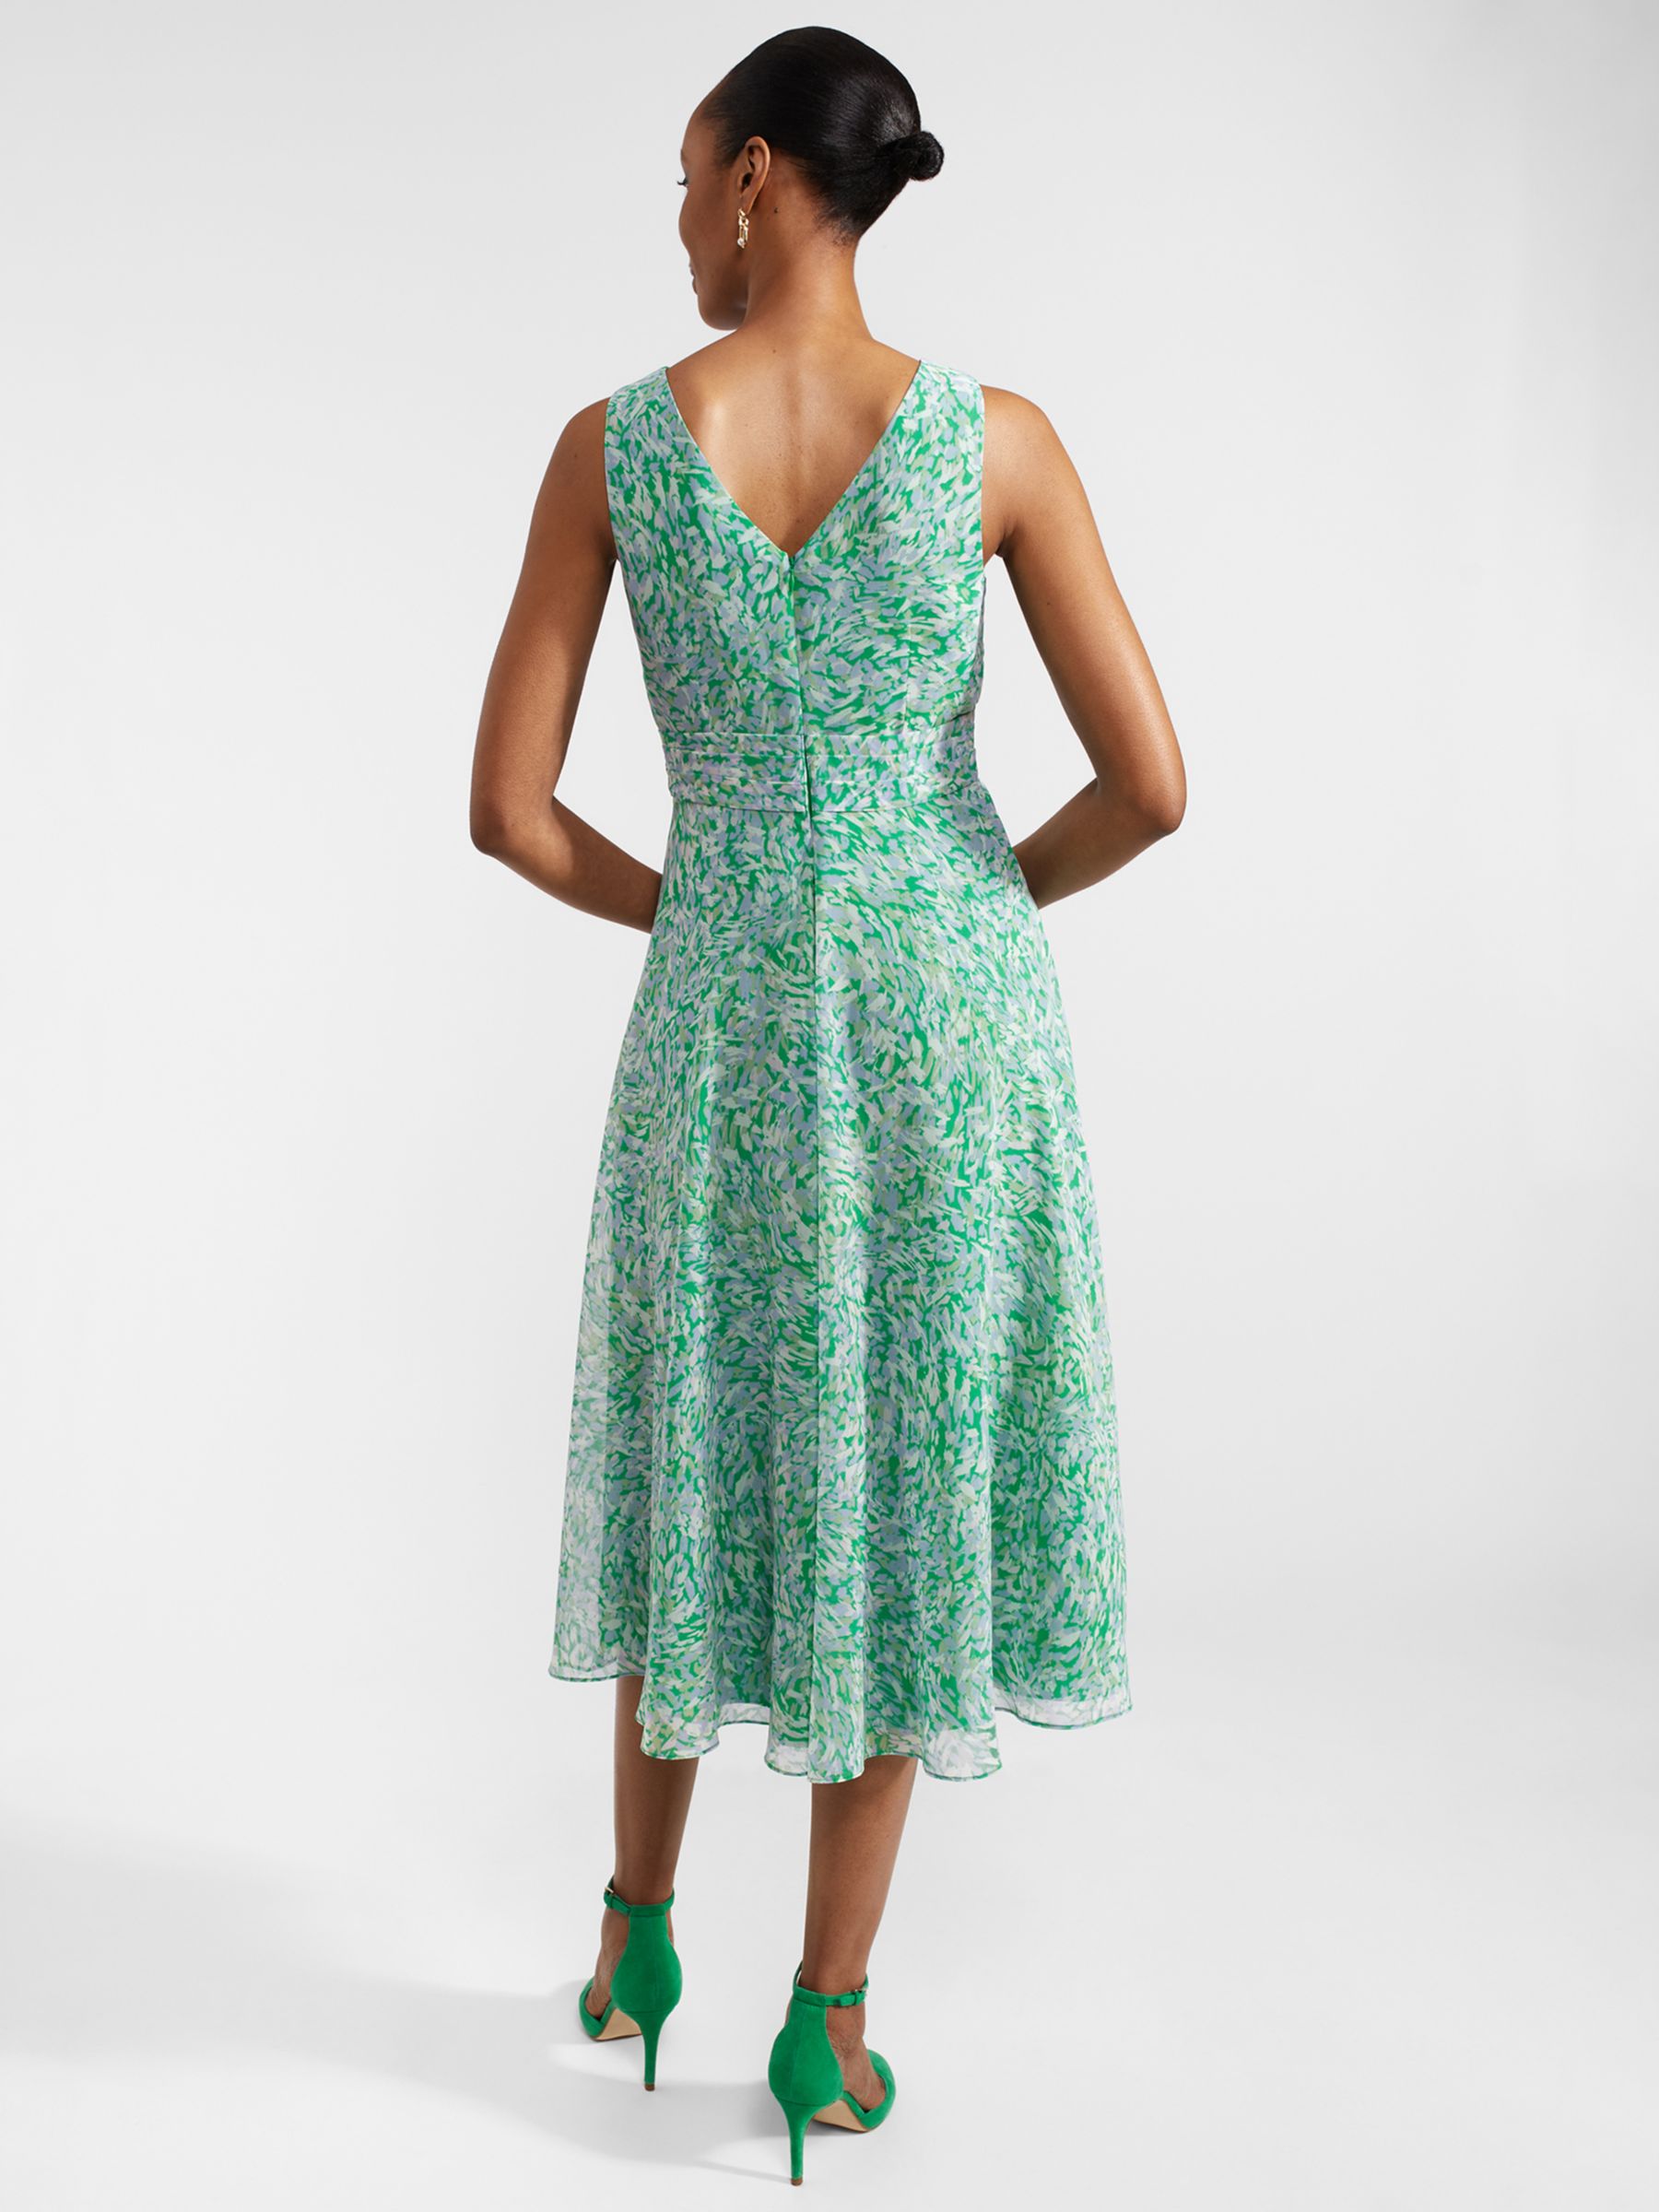 Hobbs Jess Abstract Print Midi Dress, Green/Multi, 10